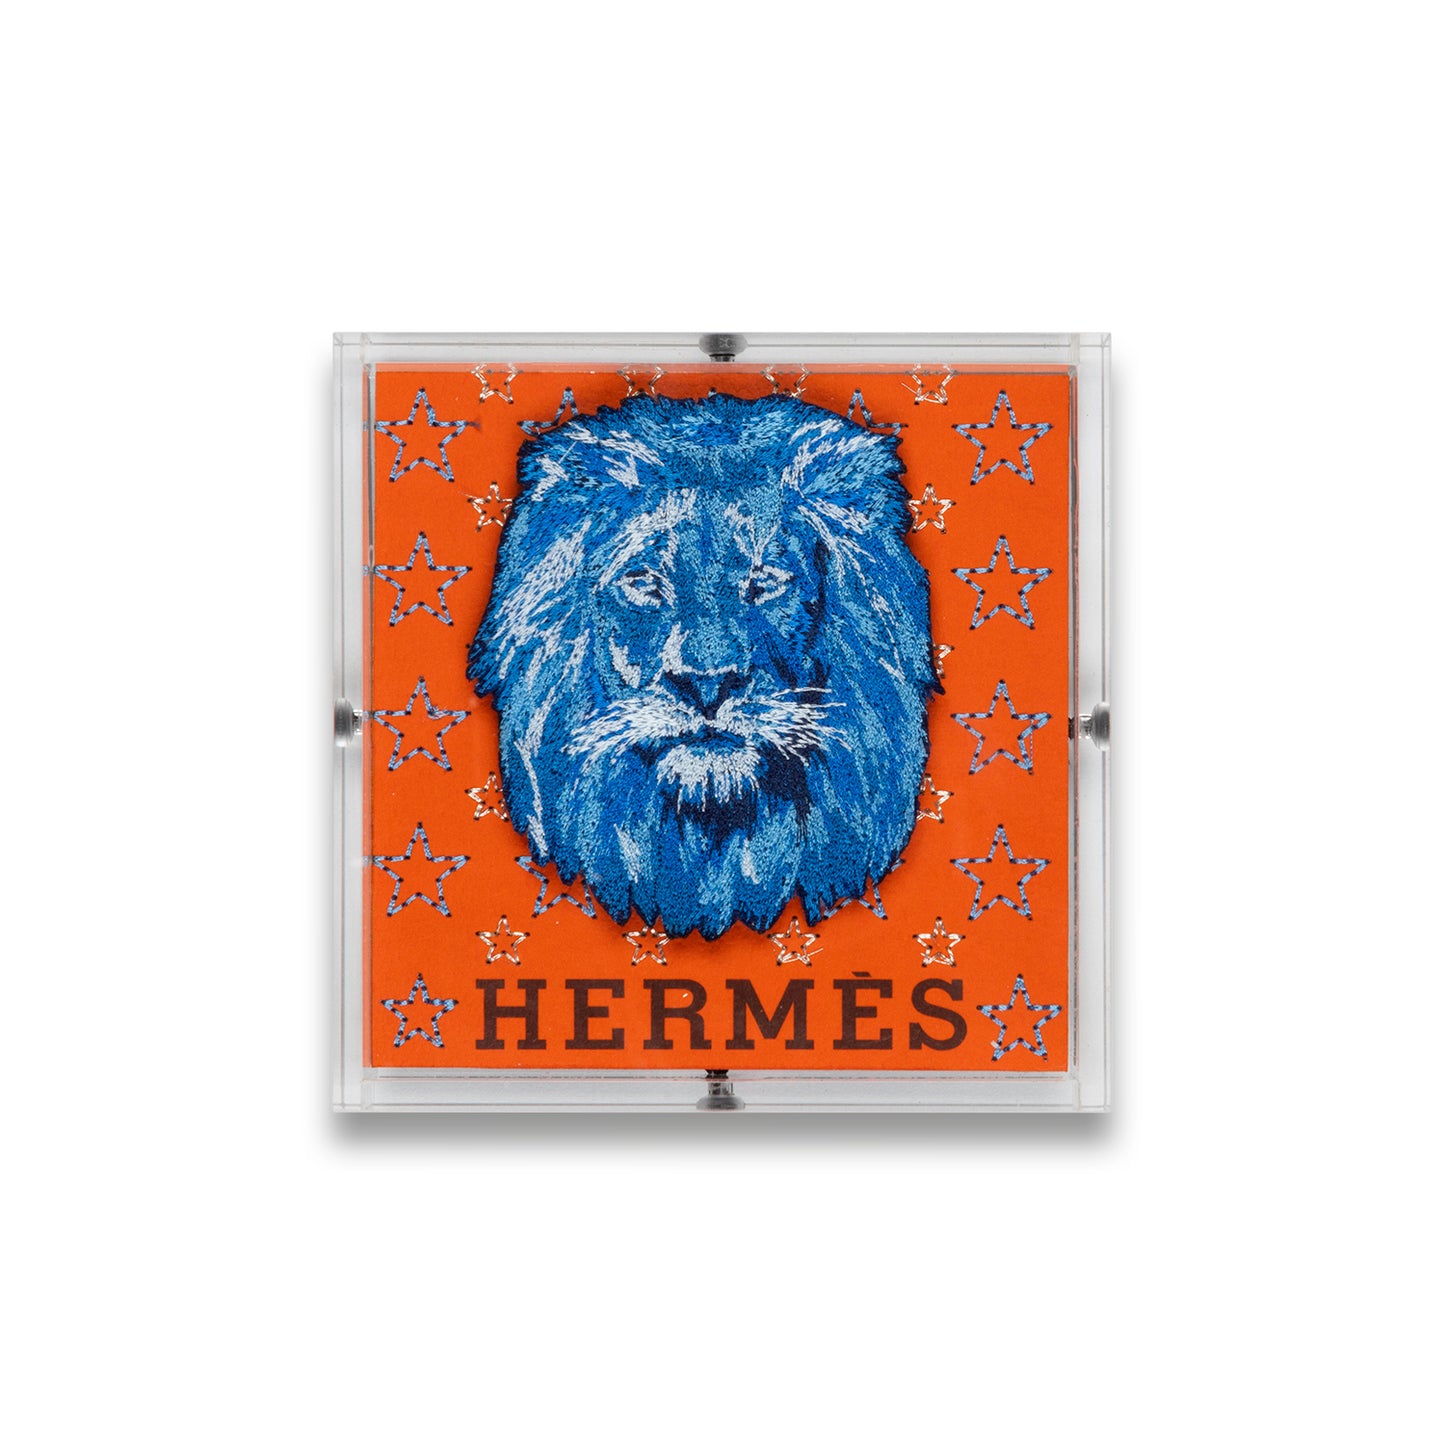 Petite Blue Hermes Strength by Stephen Wilson (5x5x2")